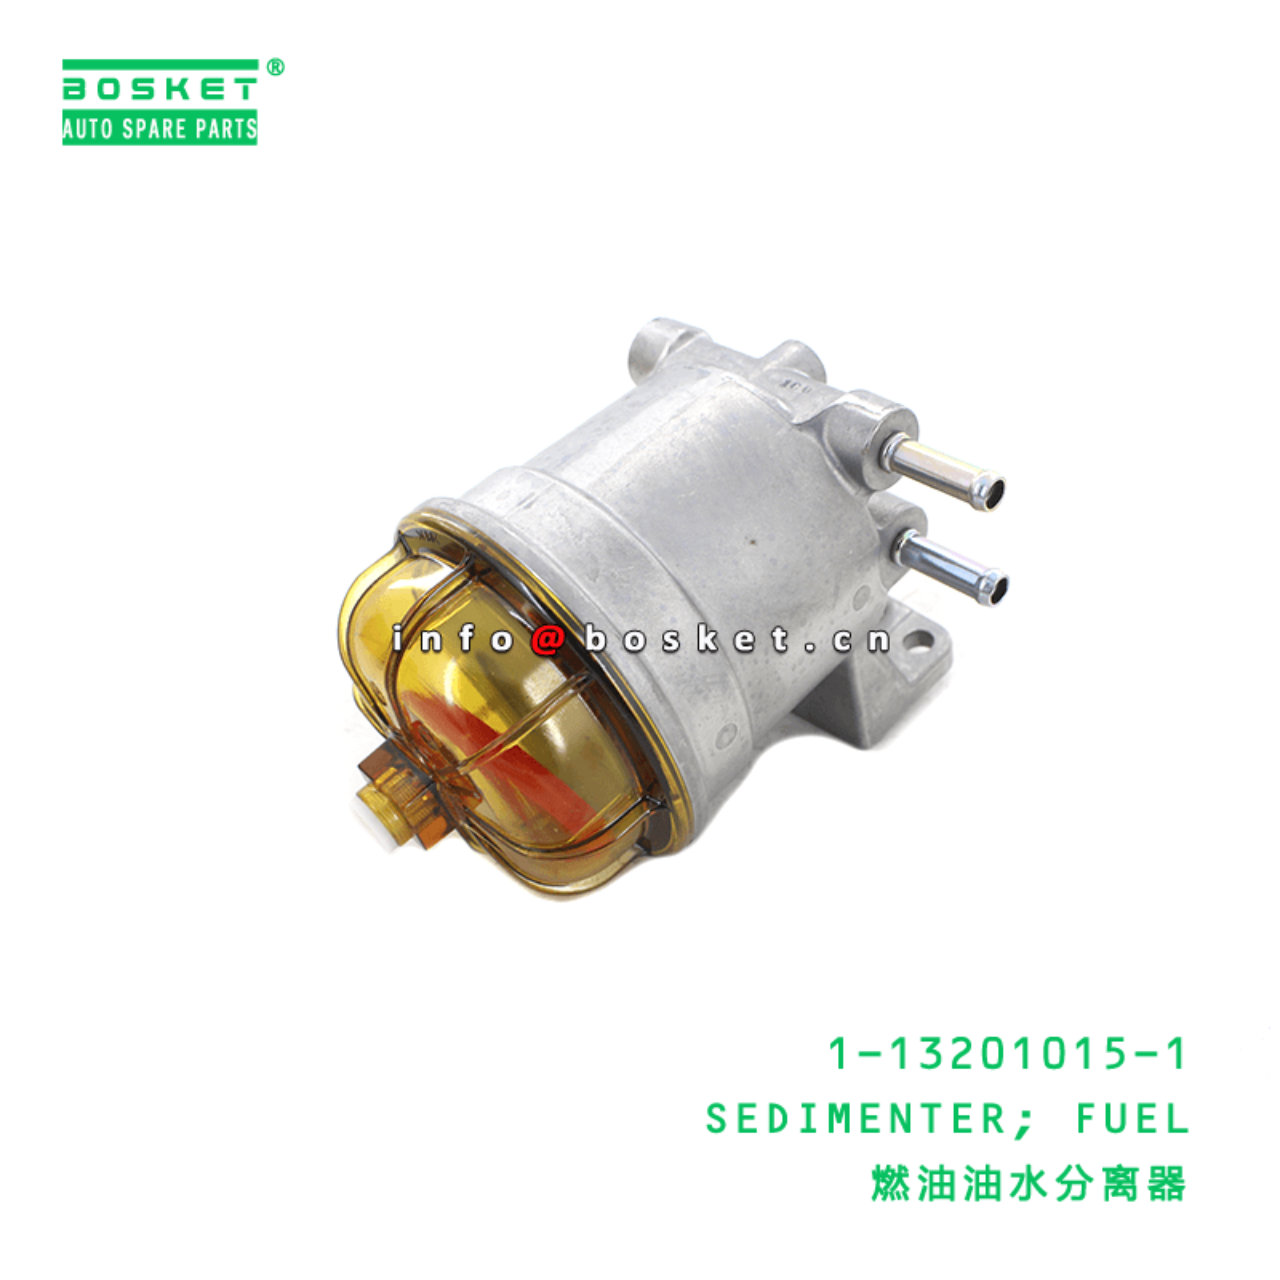  1-13201015-1 Fuel Sedimenter 1132010151 Suitable for ISUZU CXZ51 6WF1